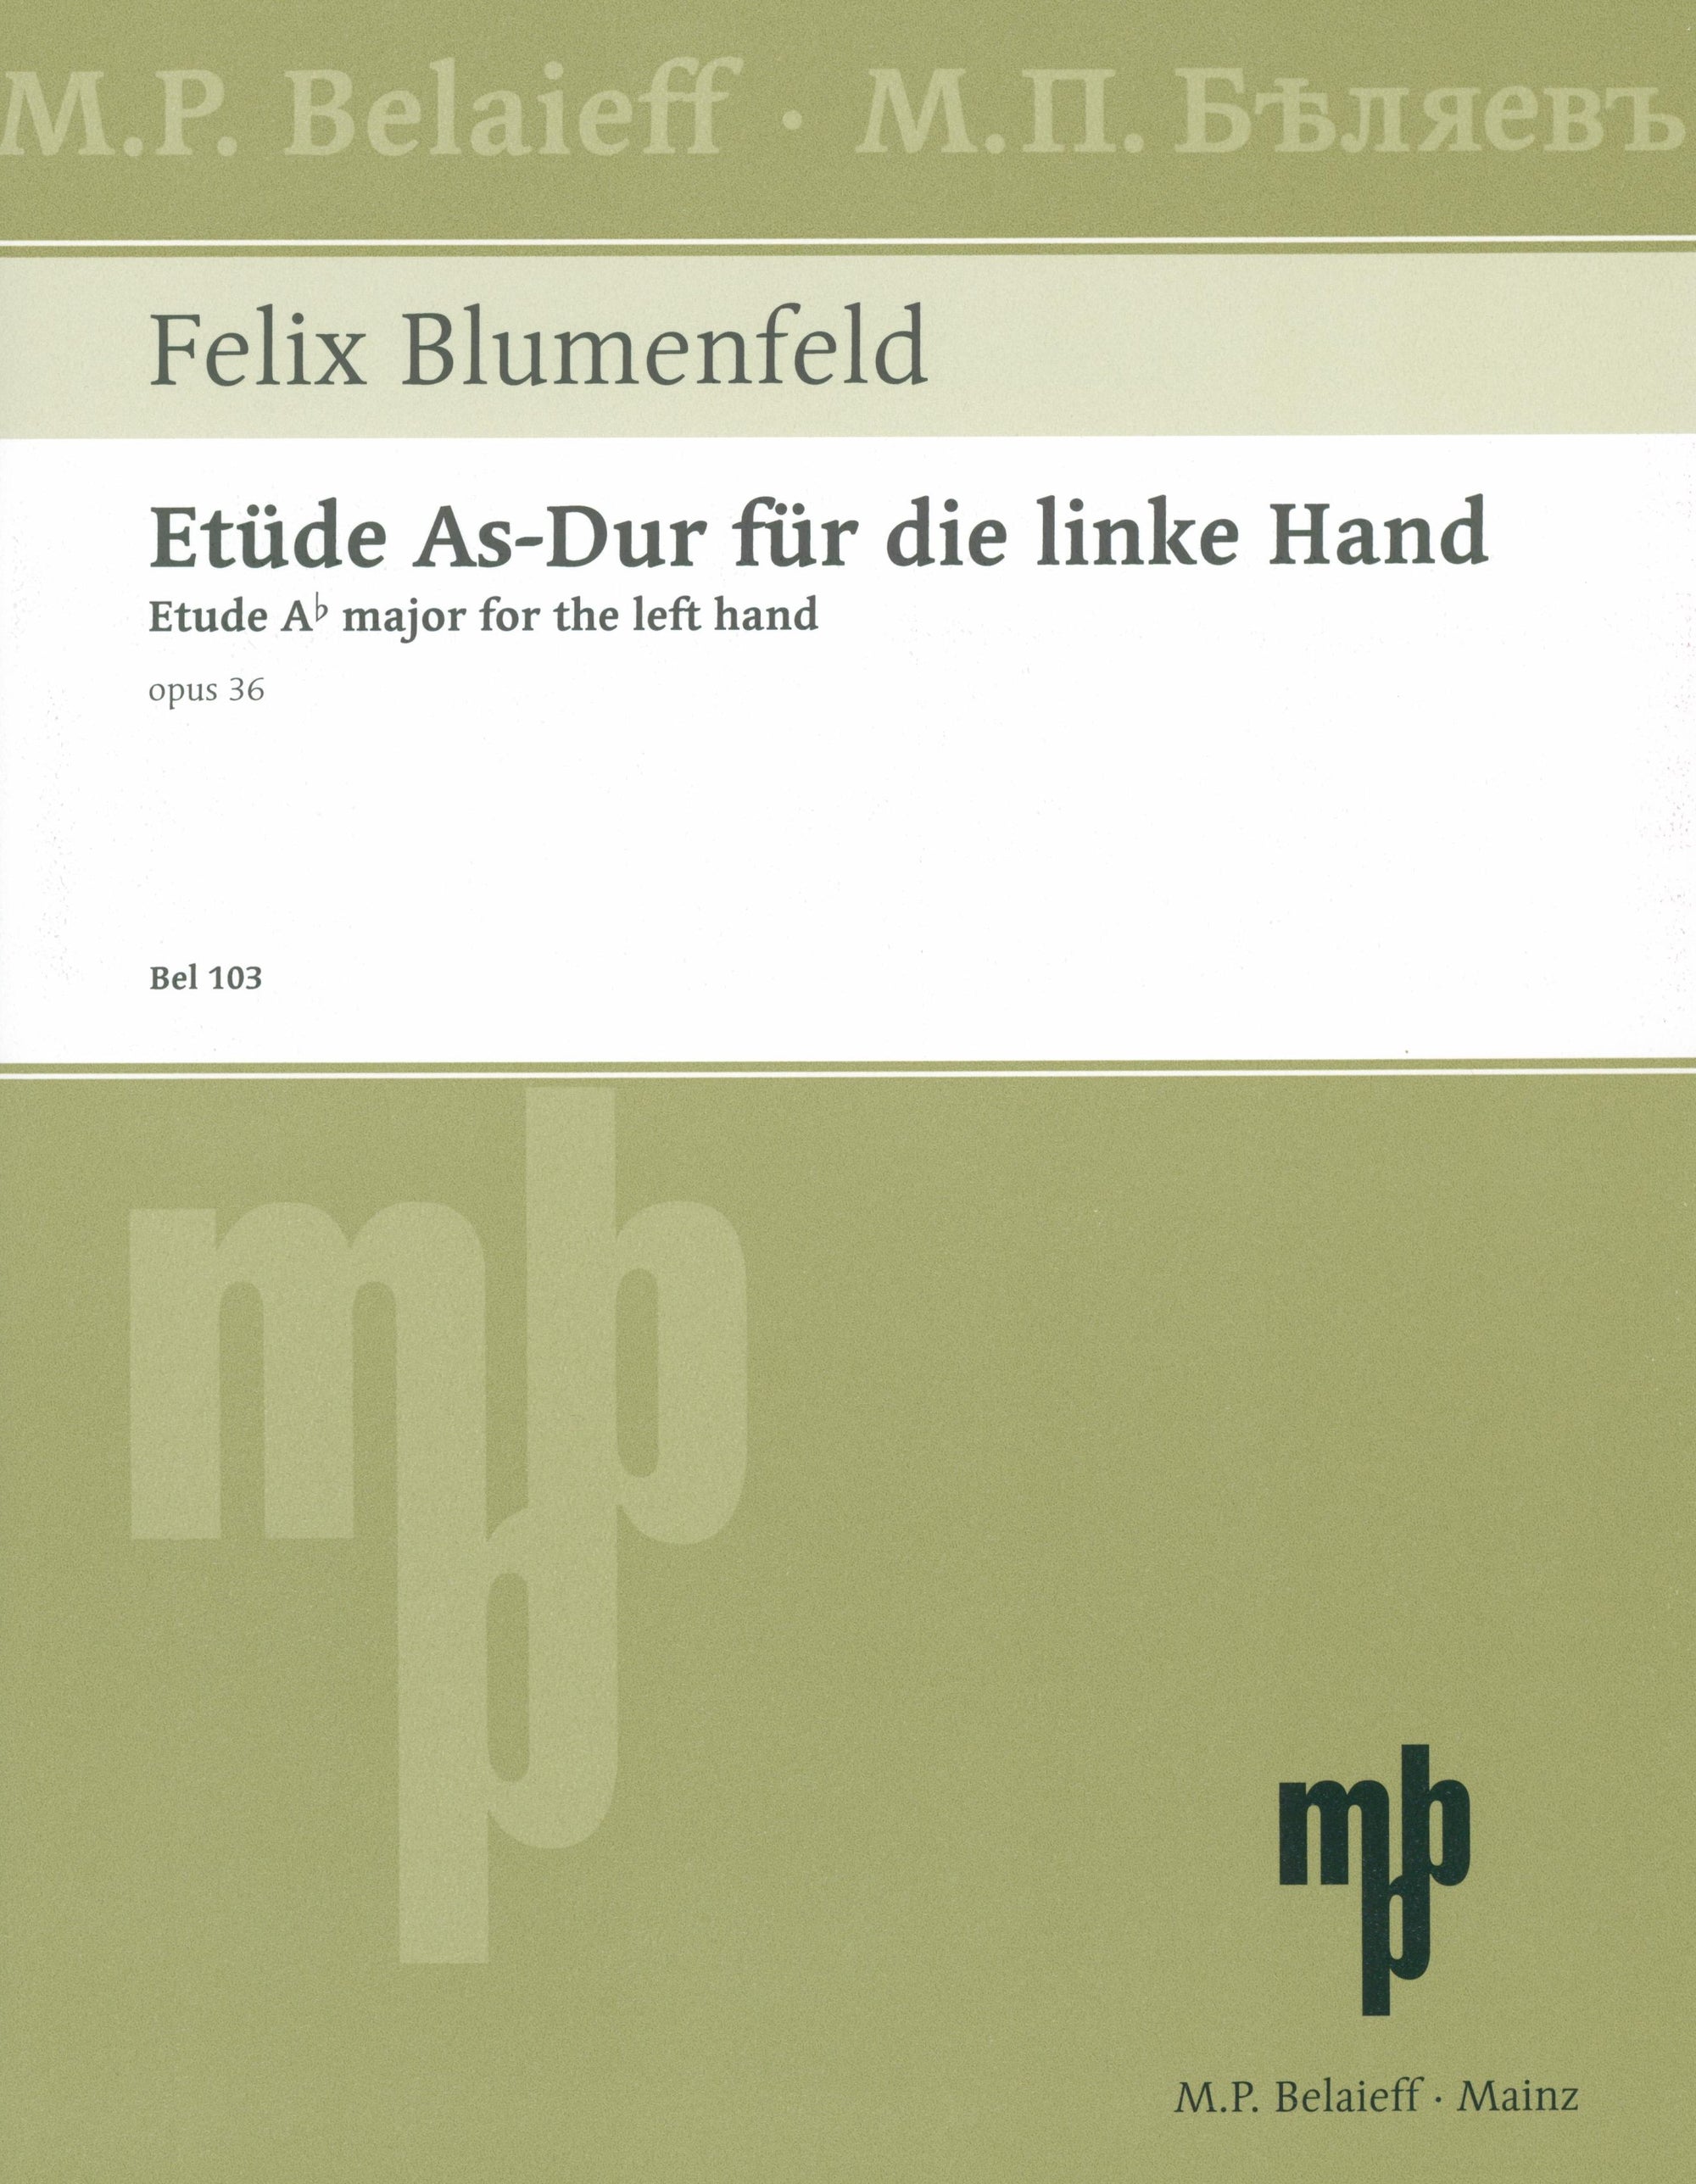 Blumenfeld: Etude for the Left Hand in A-flat Major, Op. 36